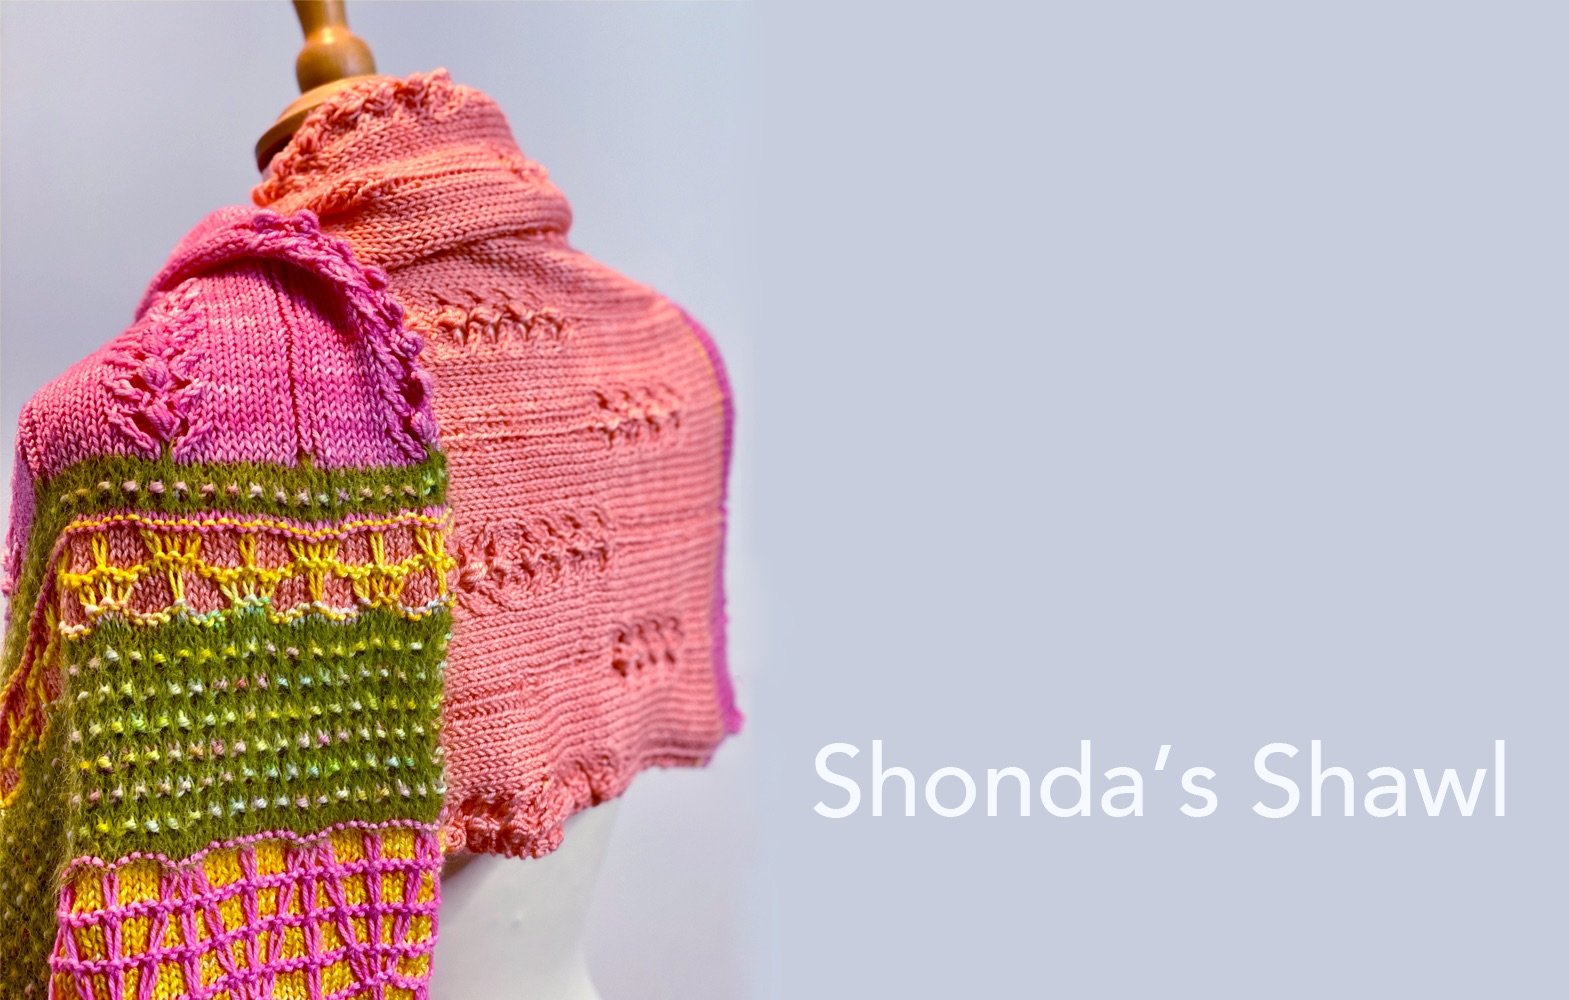 Shonda's shawl v2